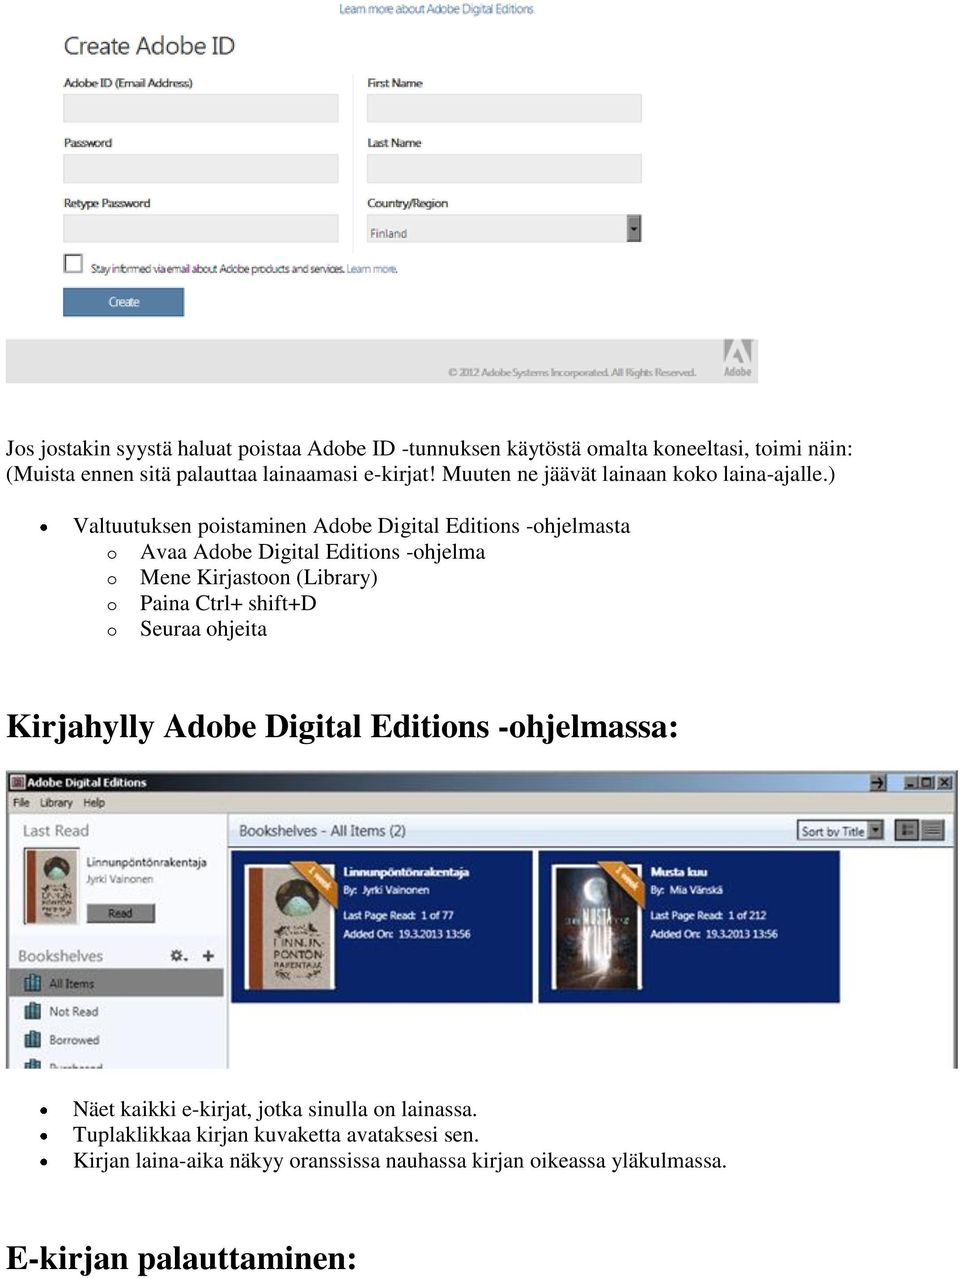 ) Valtuutuksen poistaminen Adobe Digital Editions -ohjelmasta o Avaa Adobe Digital Editions -ohjelma o Mene Kirjastoon (Library) o Paina Ctrl+